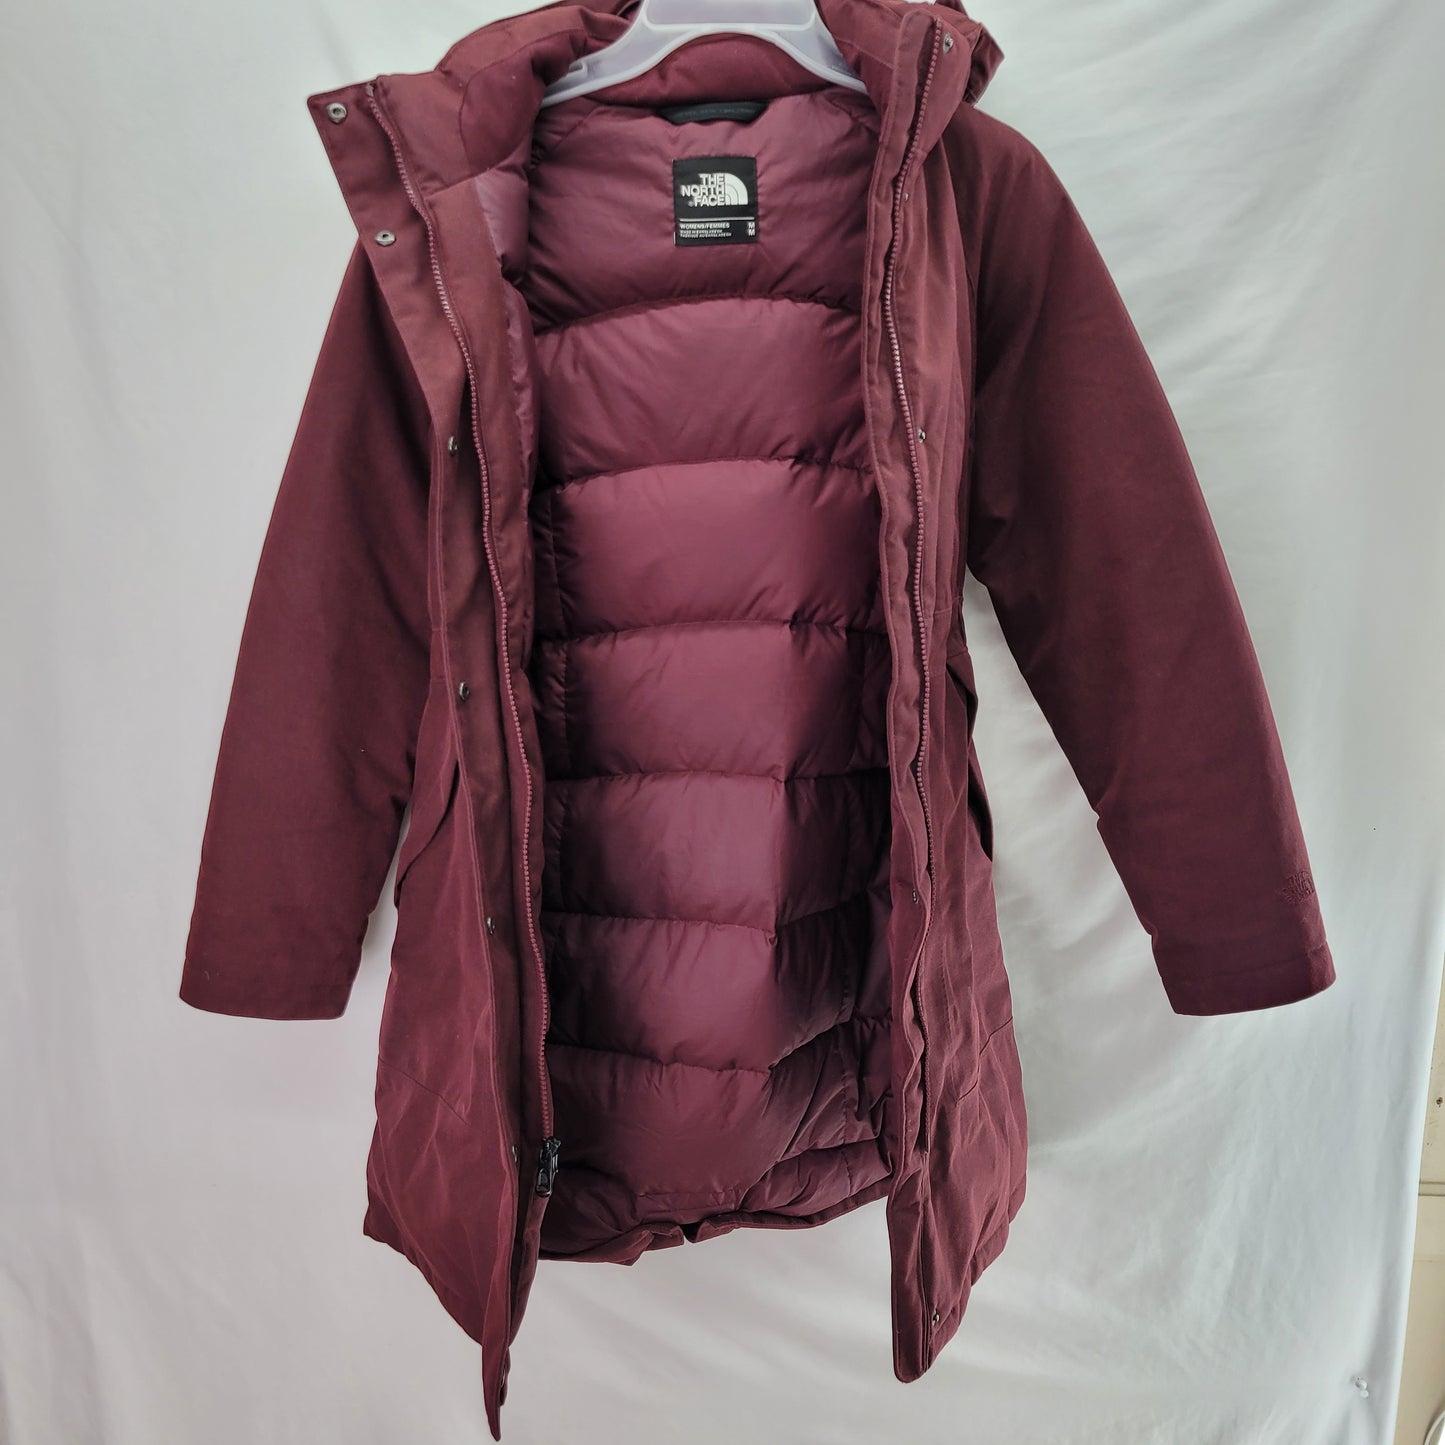 The North Face Women's Winter Jacket Dark Pink - Medium